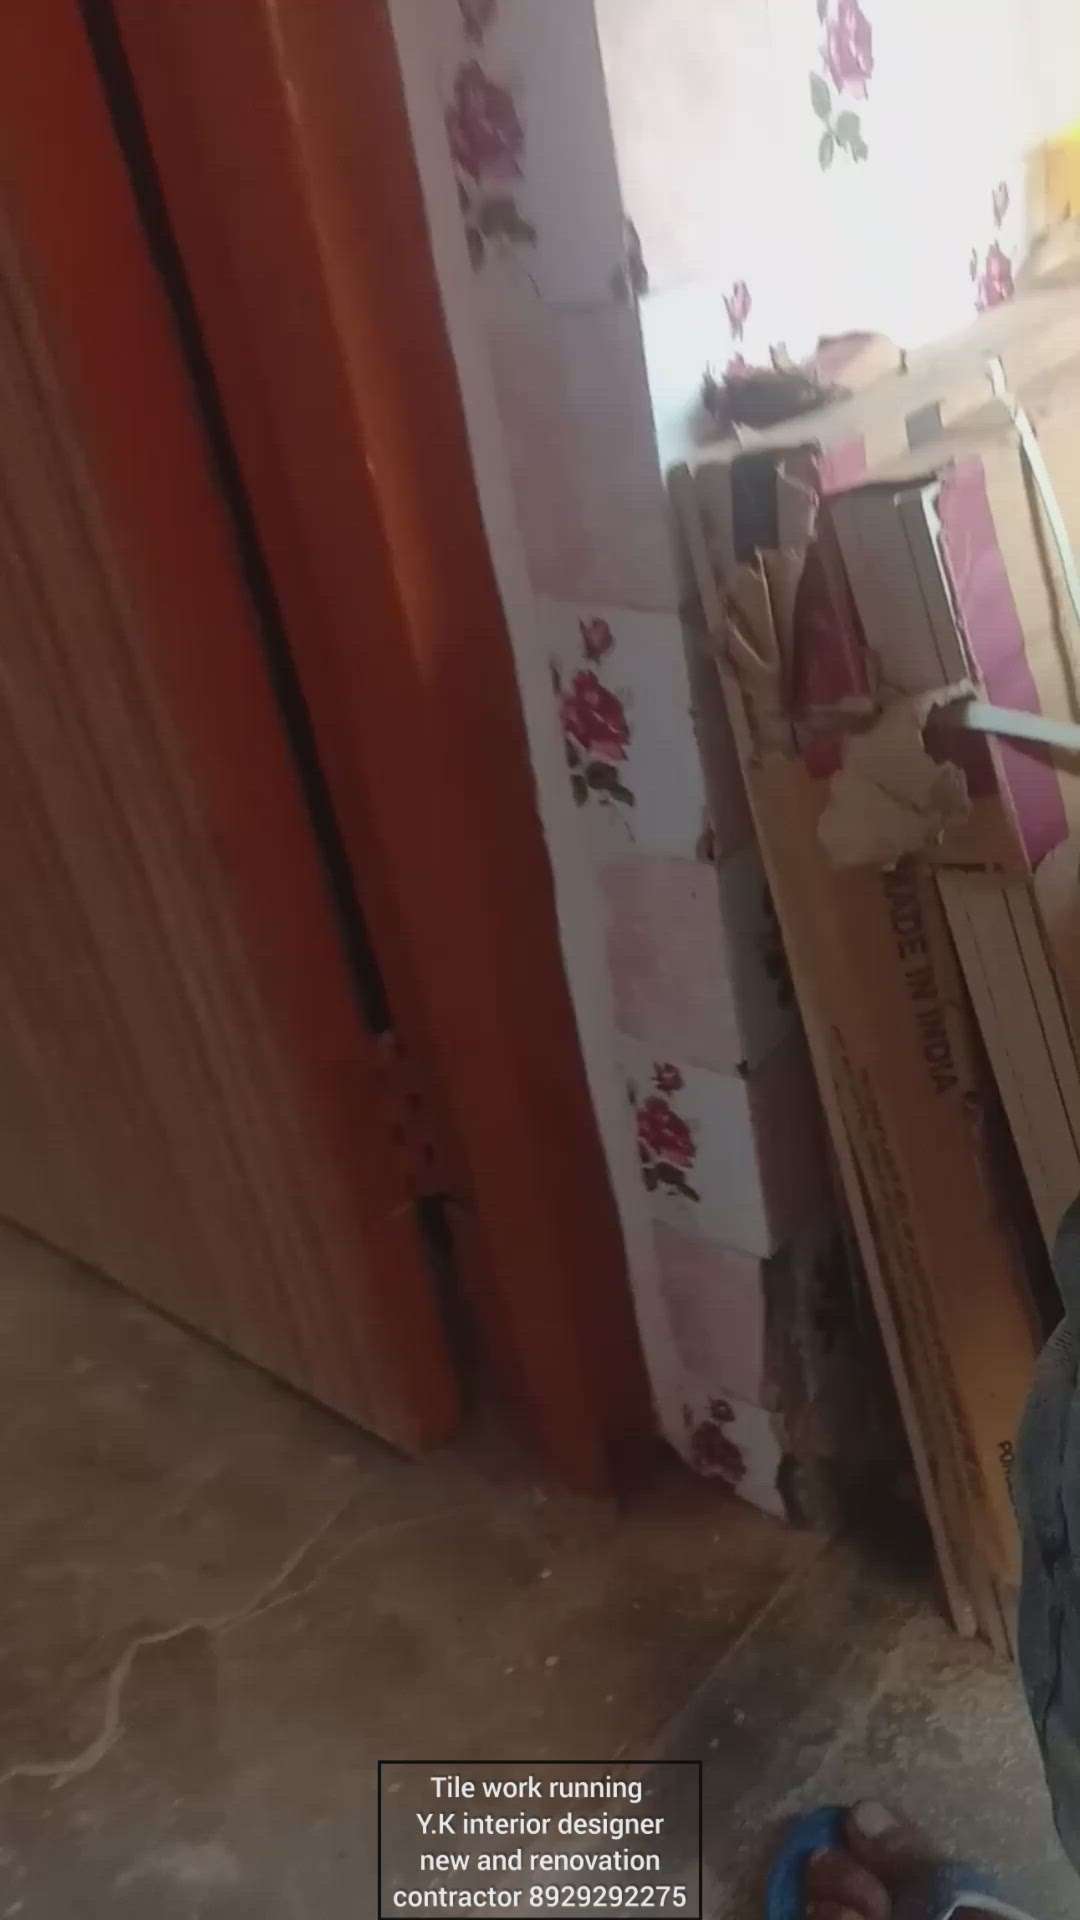 tile work running Delhi 
Y.K interior designer new and renovation contractor  #FlooringTiles  #BathroomFittings  #BathroomTIles  #KitchenTiles  #modular  #MarbleFlooring  #marblestaircase  #ykbestintetior  #ykintetiorroom  #ykconstrution  #ykmodularkitchen  #ykbuildingrenovation